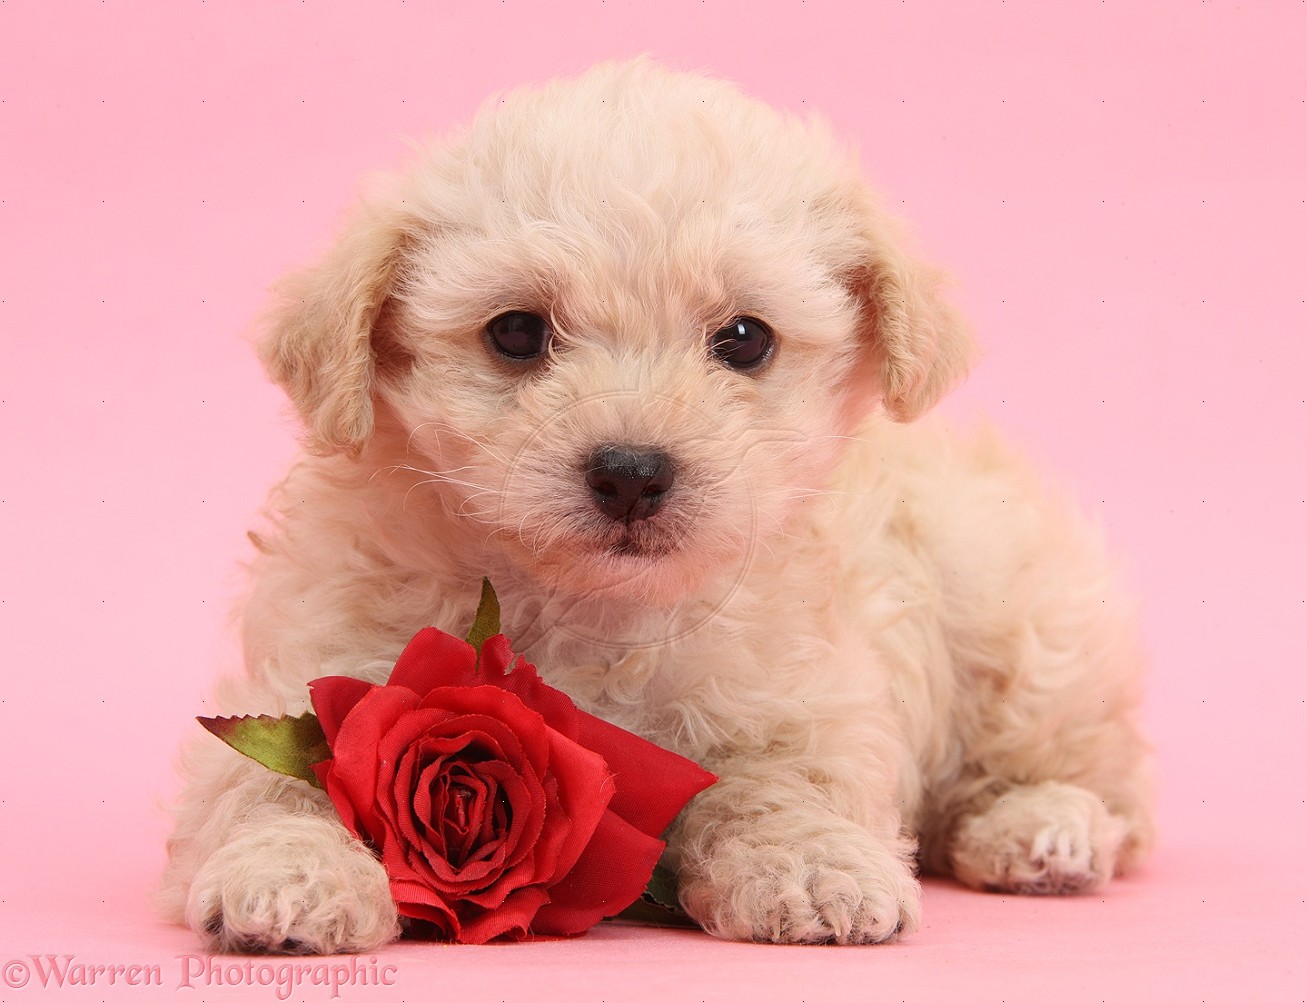 Cute Valentine Puppy With Rose On Pink Background IwallHD